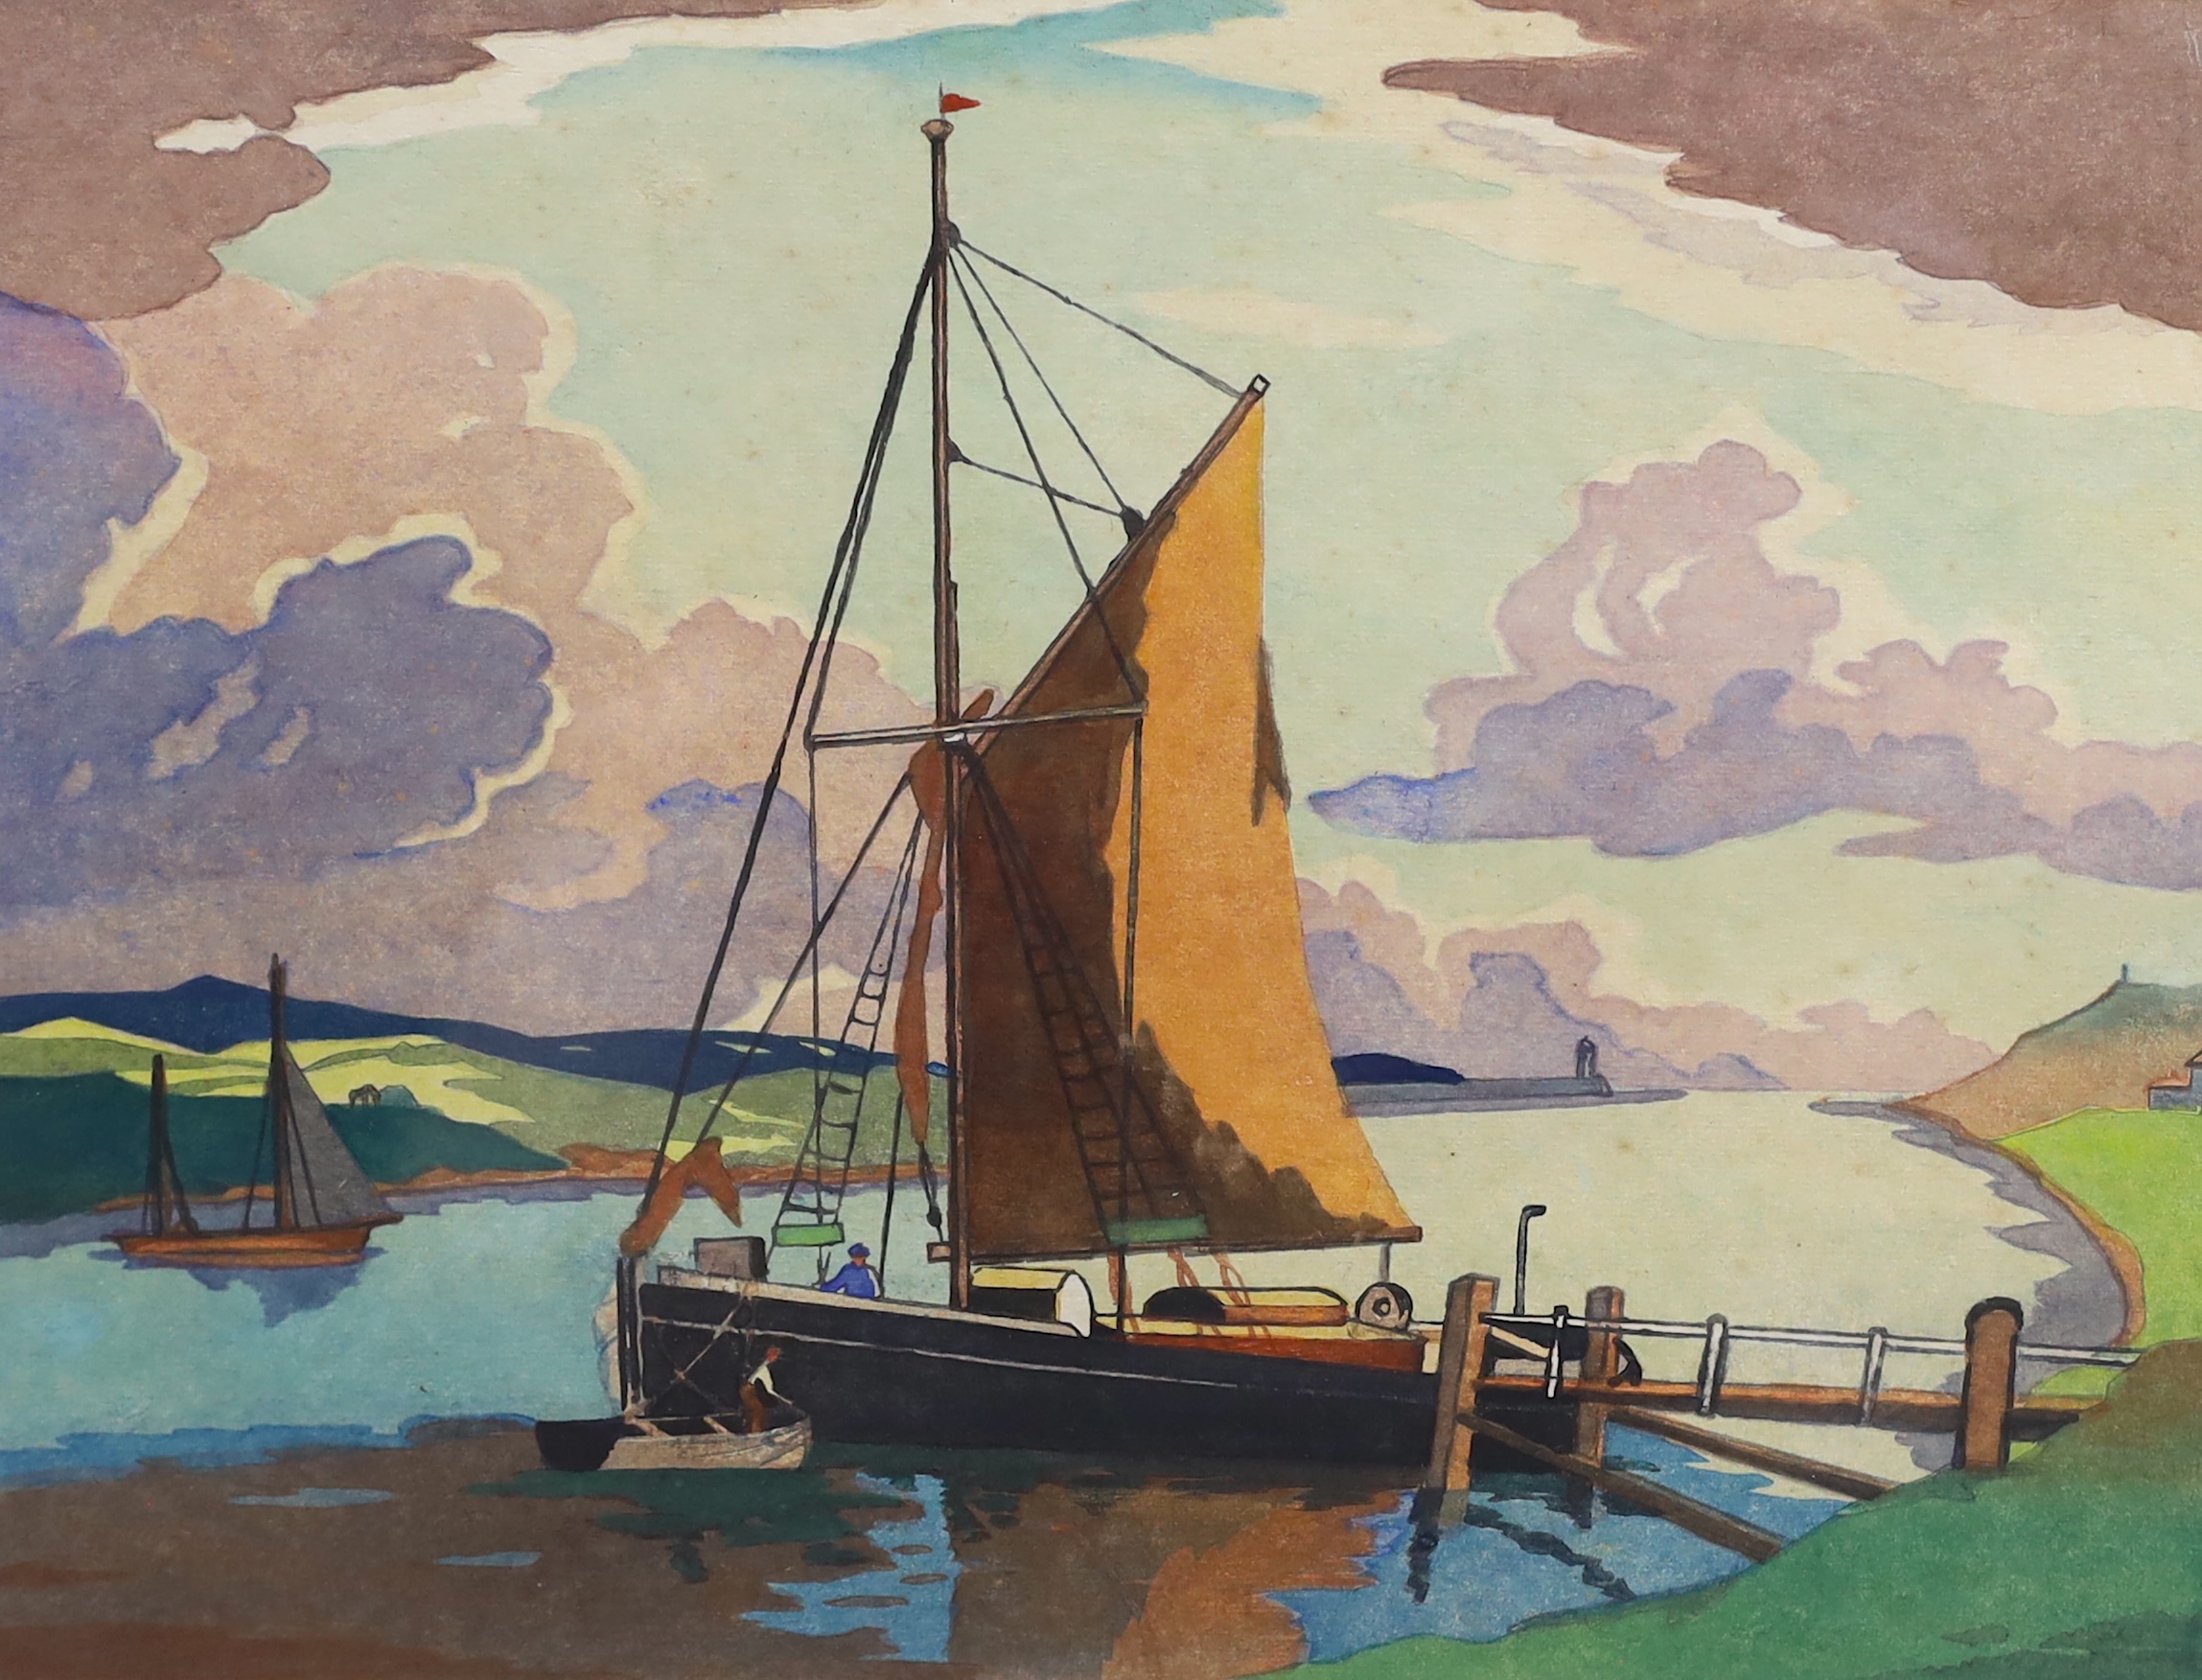 Eric Slater (British, 1896-1963), 'Morning Calm', wood engraving, 27 x 36.5cm